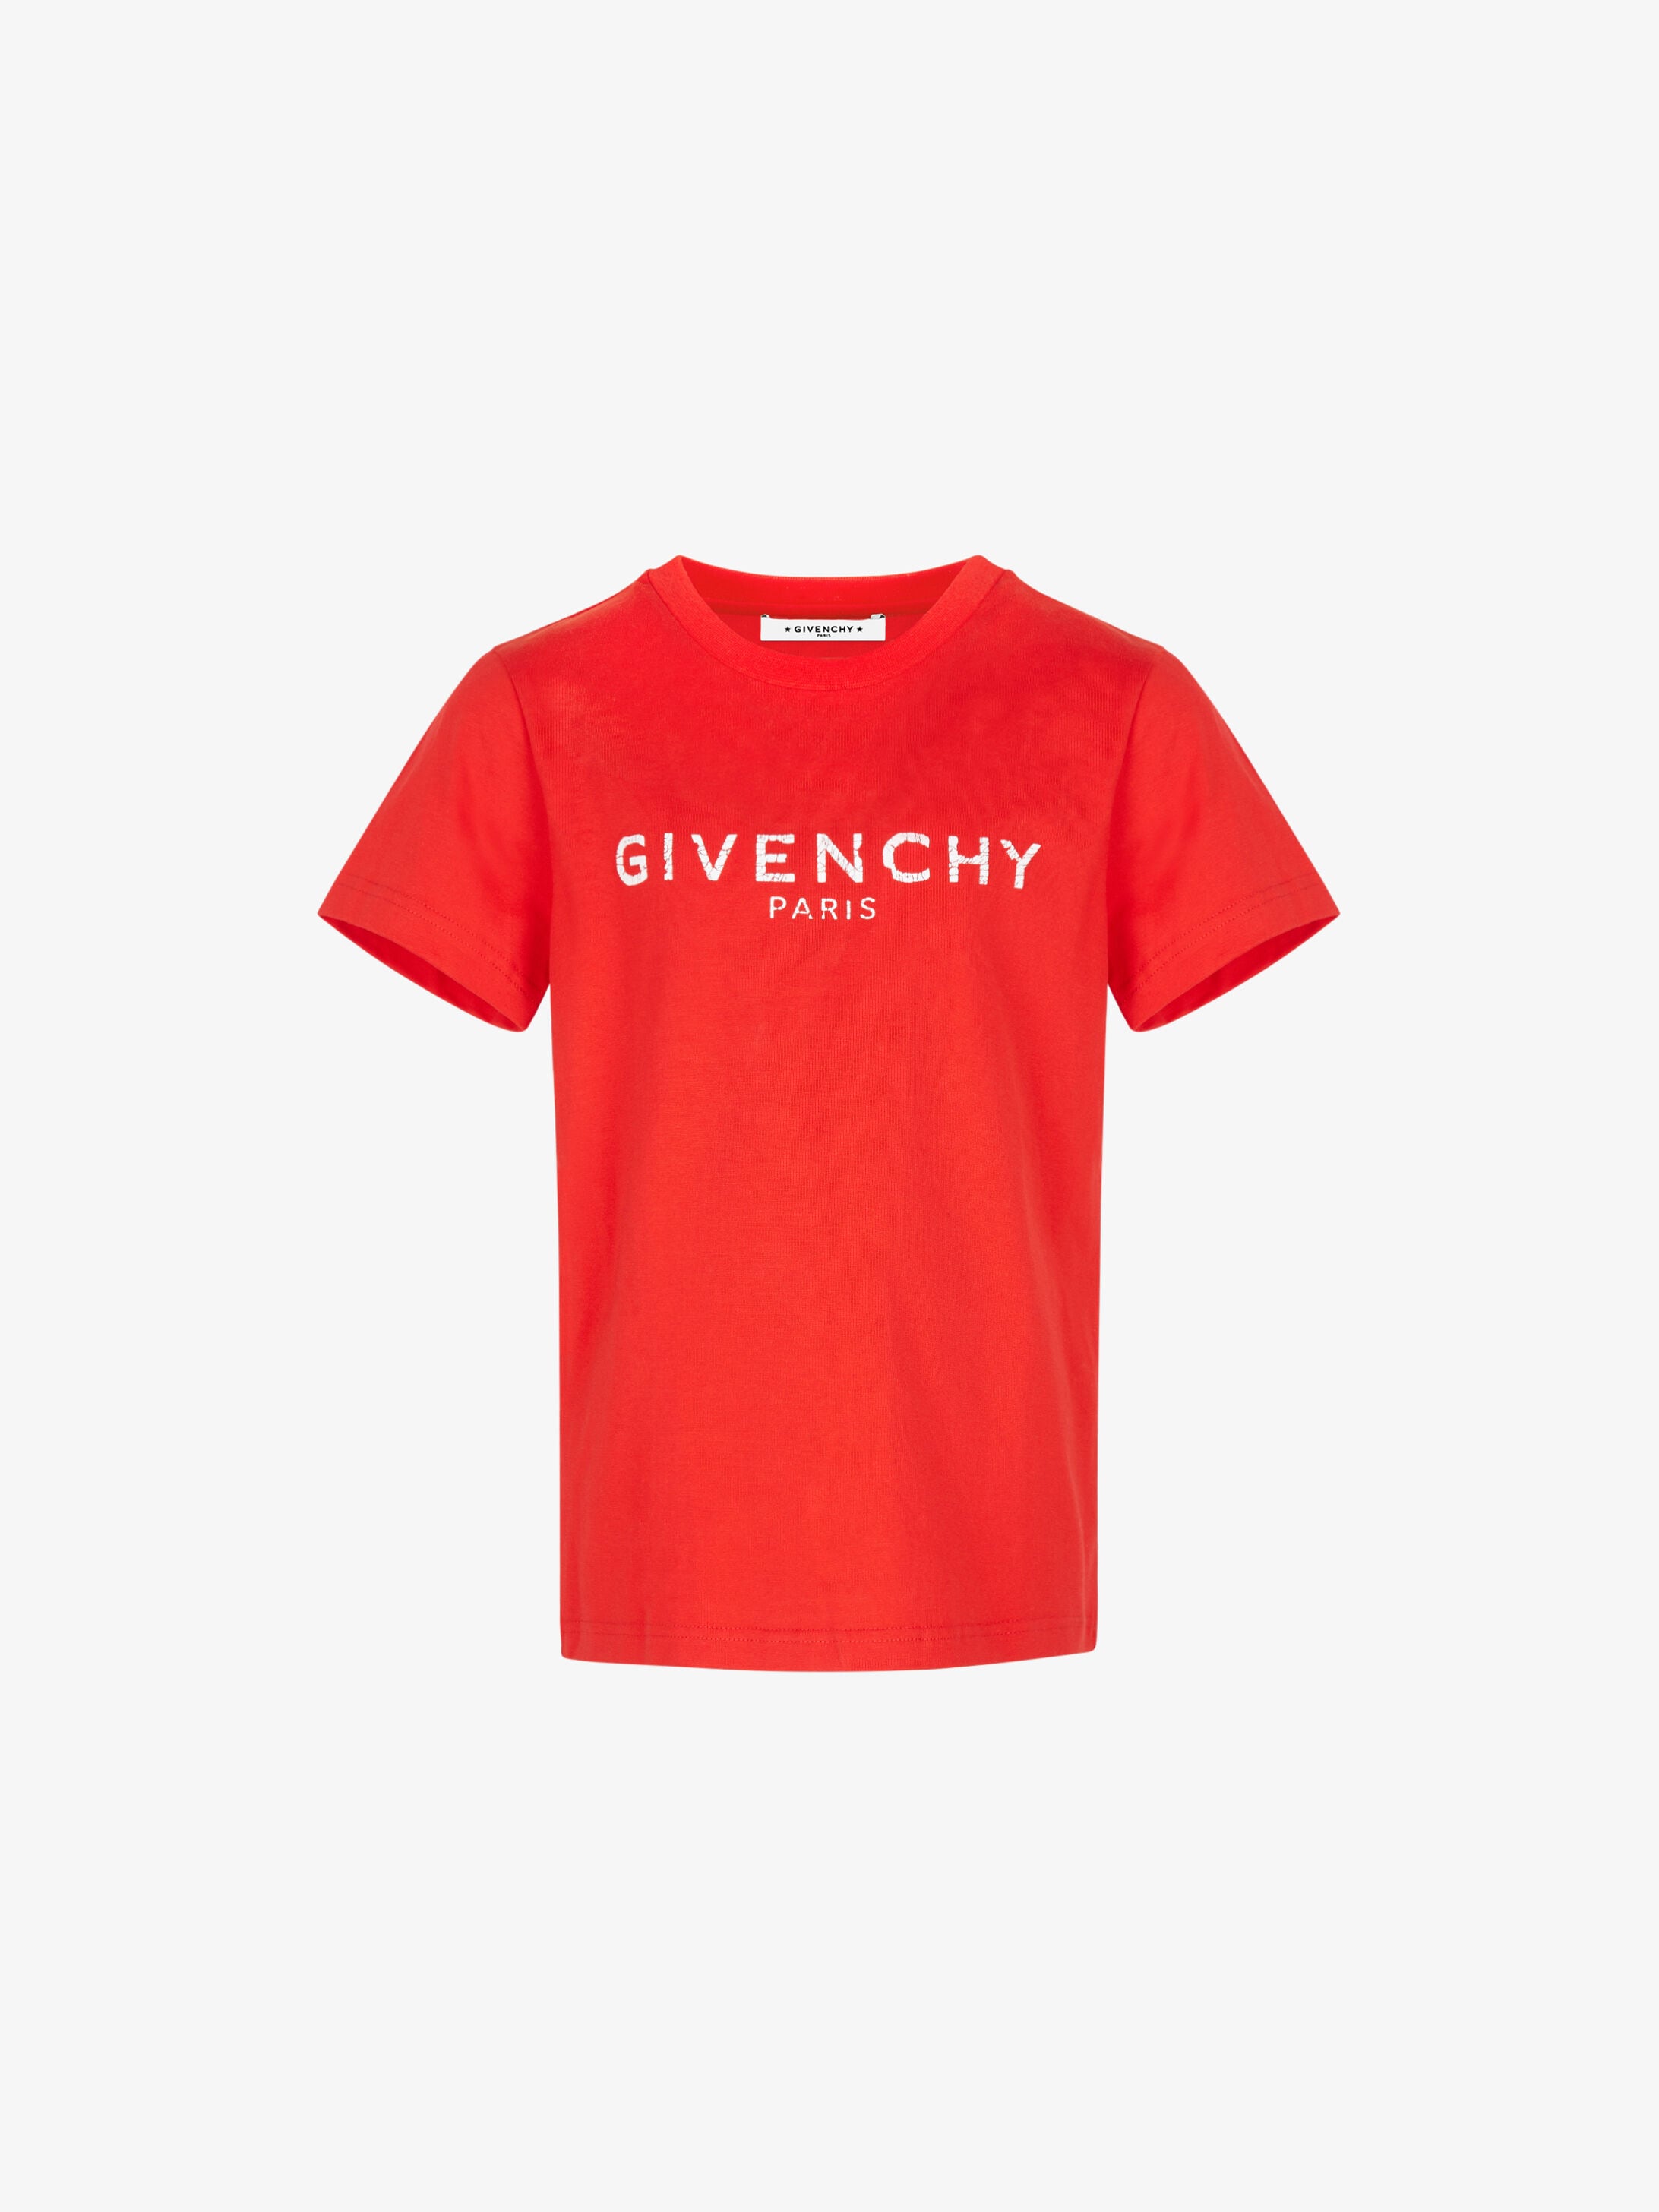 givenchy paris red t shirt